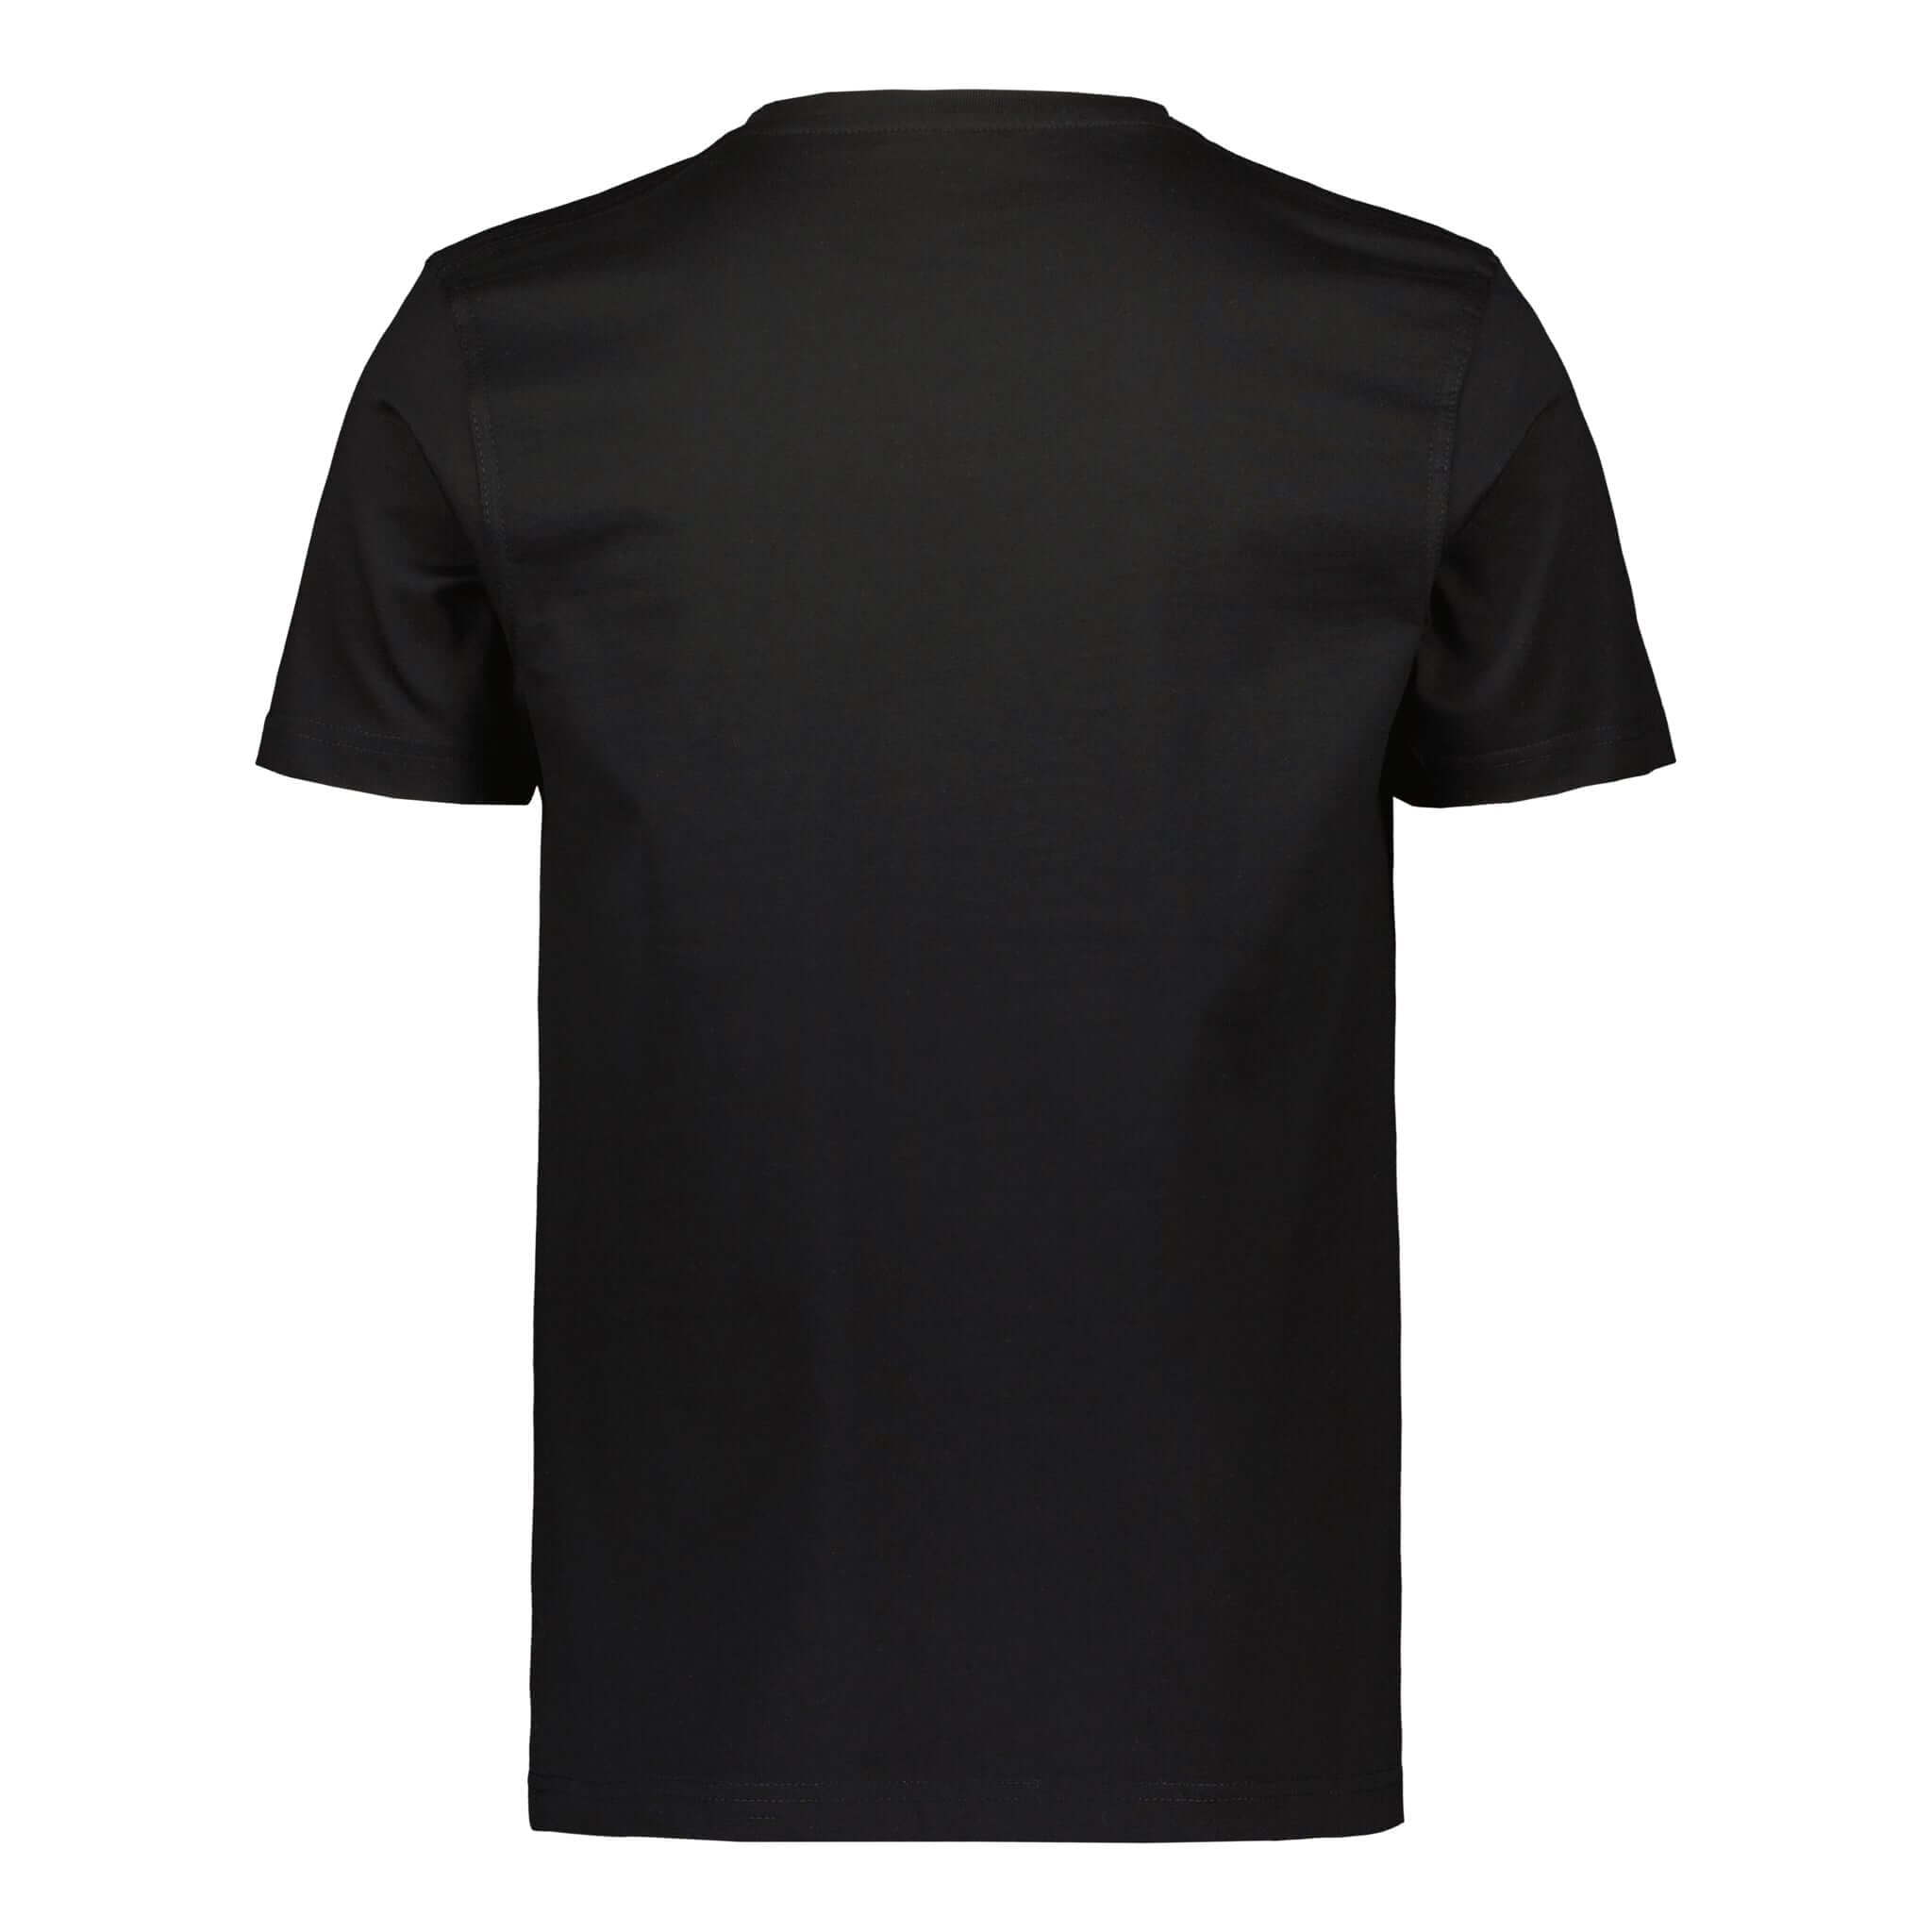 ENCE Basic T-Shirt Black | ENCE Shop